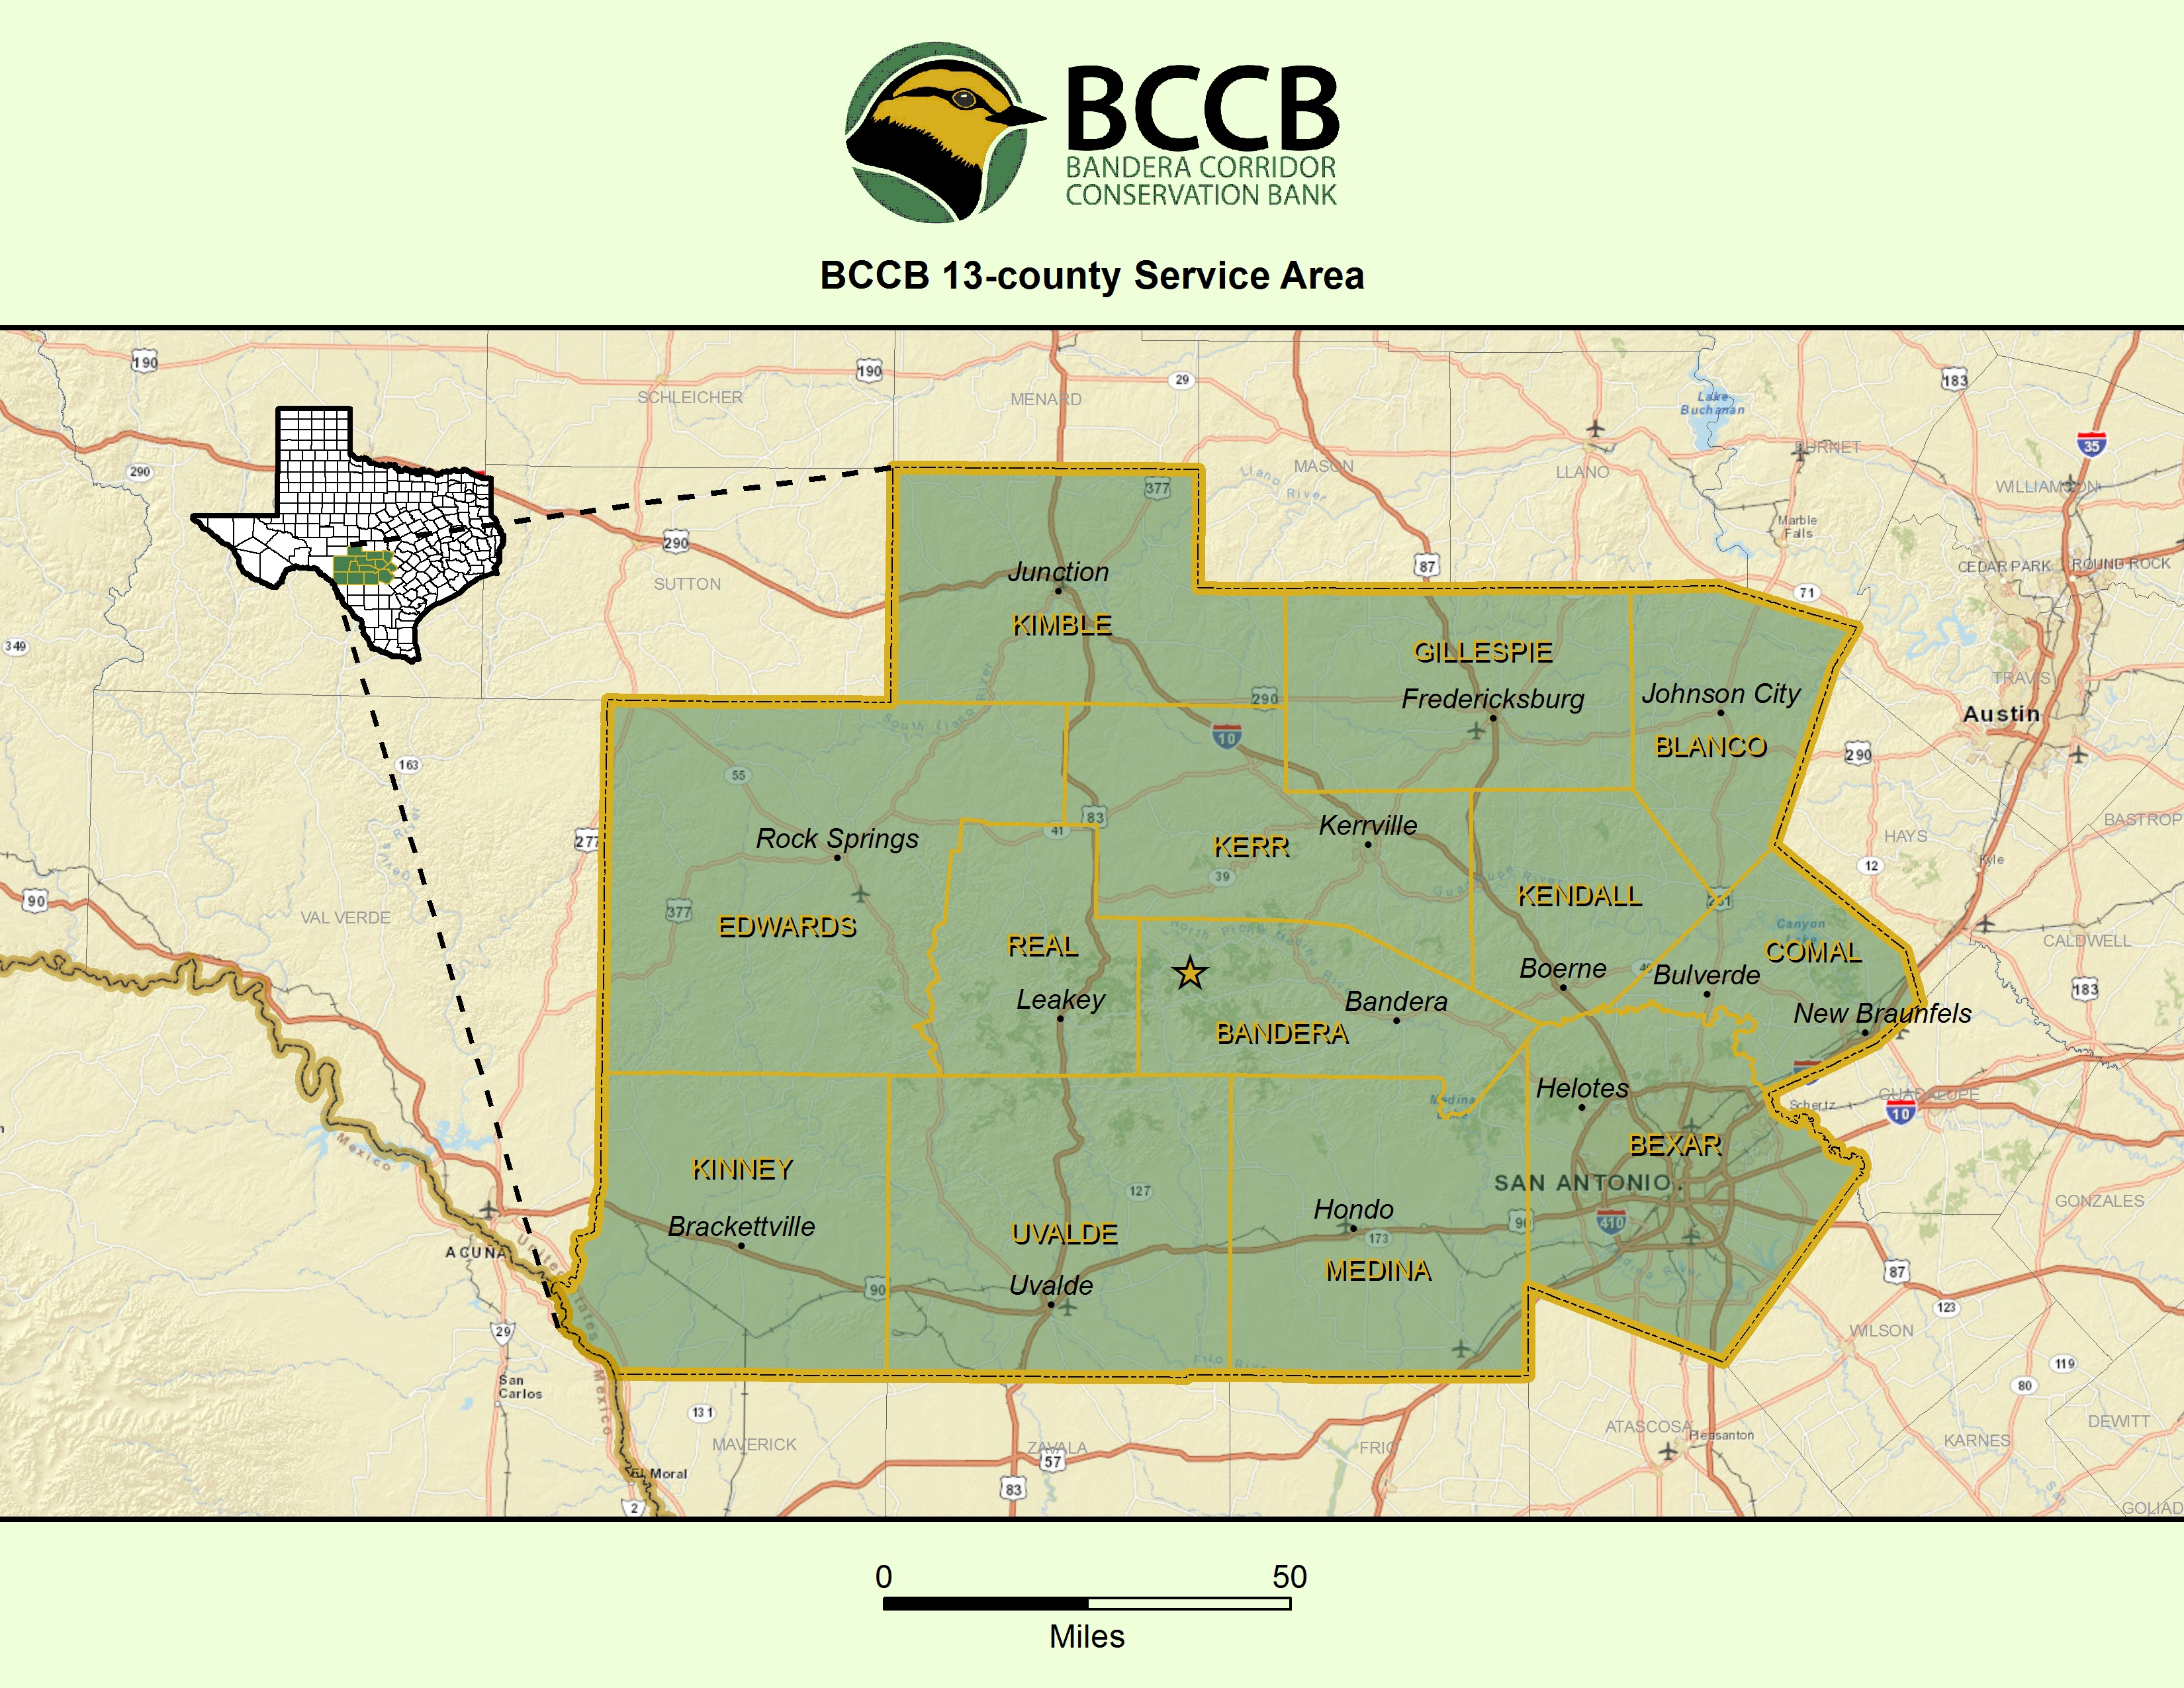 Image of Bandera Corridor Conservation Bank 13-county Service Area, including: Bandera, Bexar, Blanco, Comal, Edwards, Gillespie, Kendall, Kerr, Kimble, Kinney, Medina, Real and Uvalde counties.